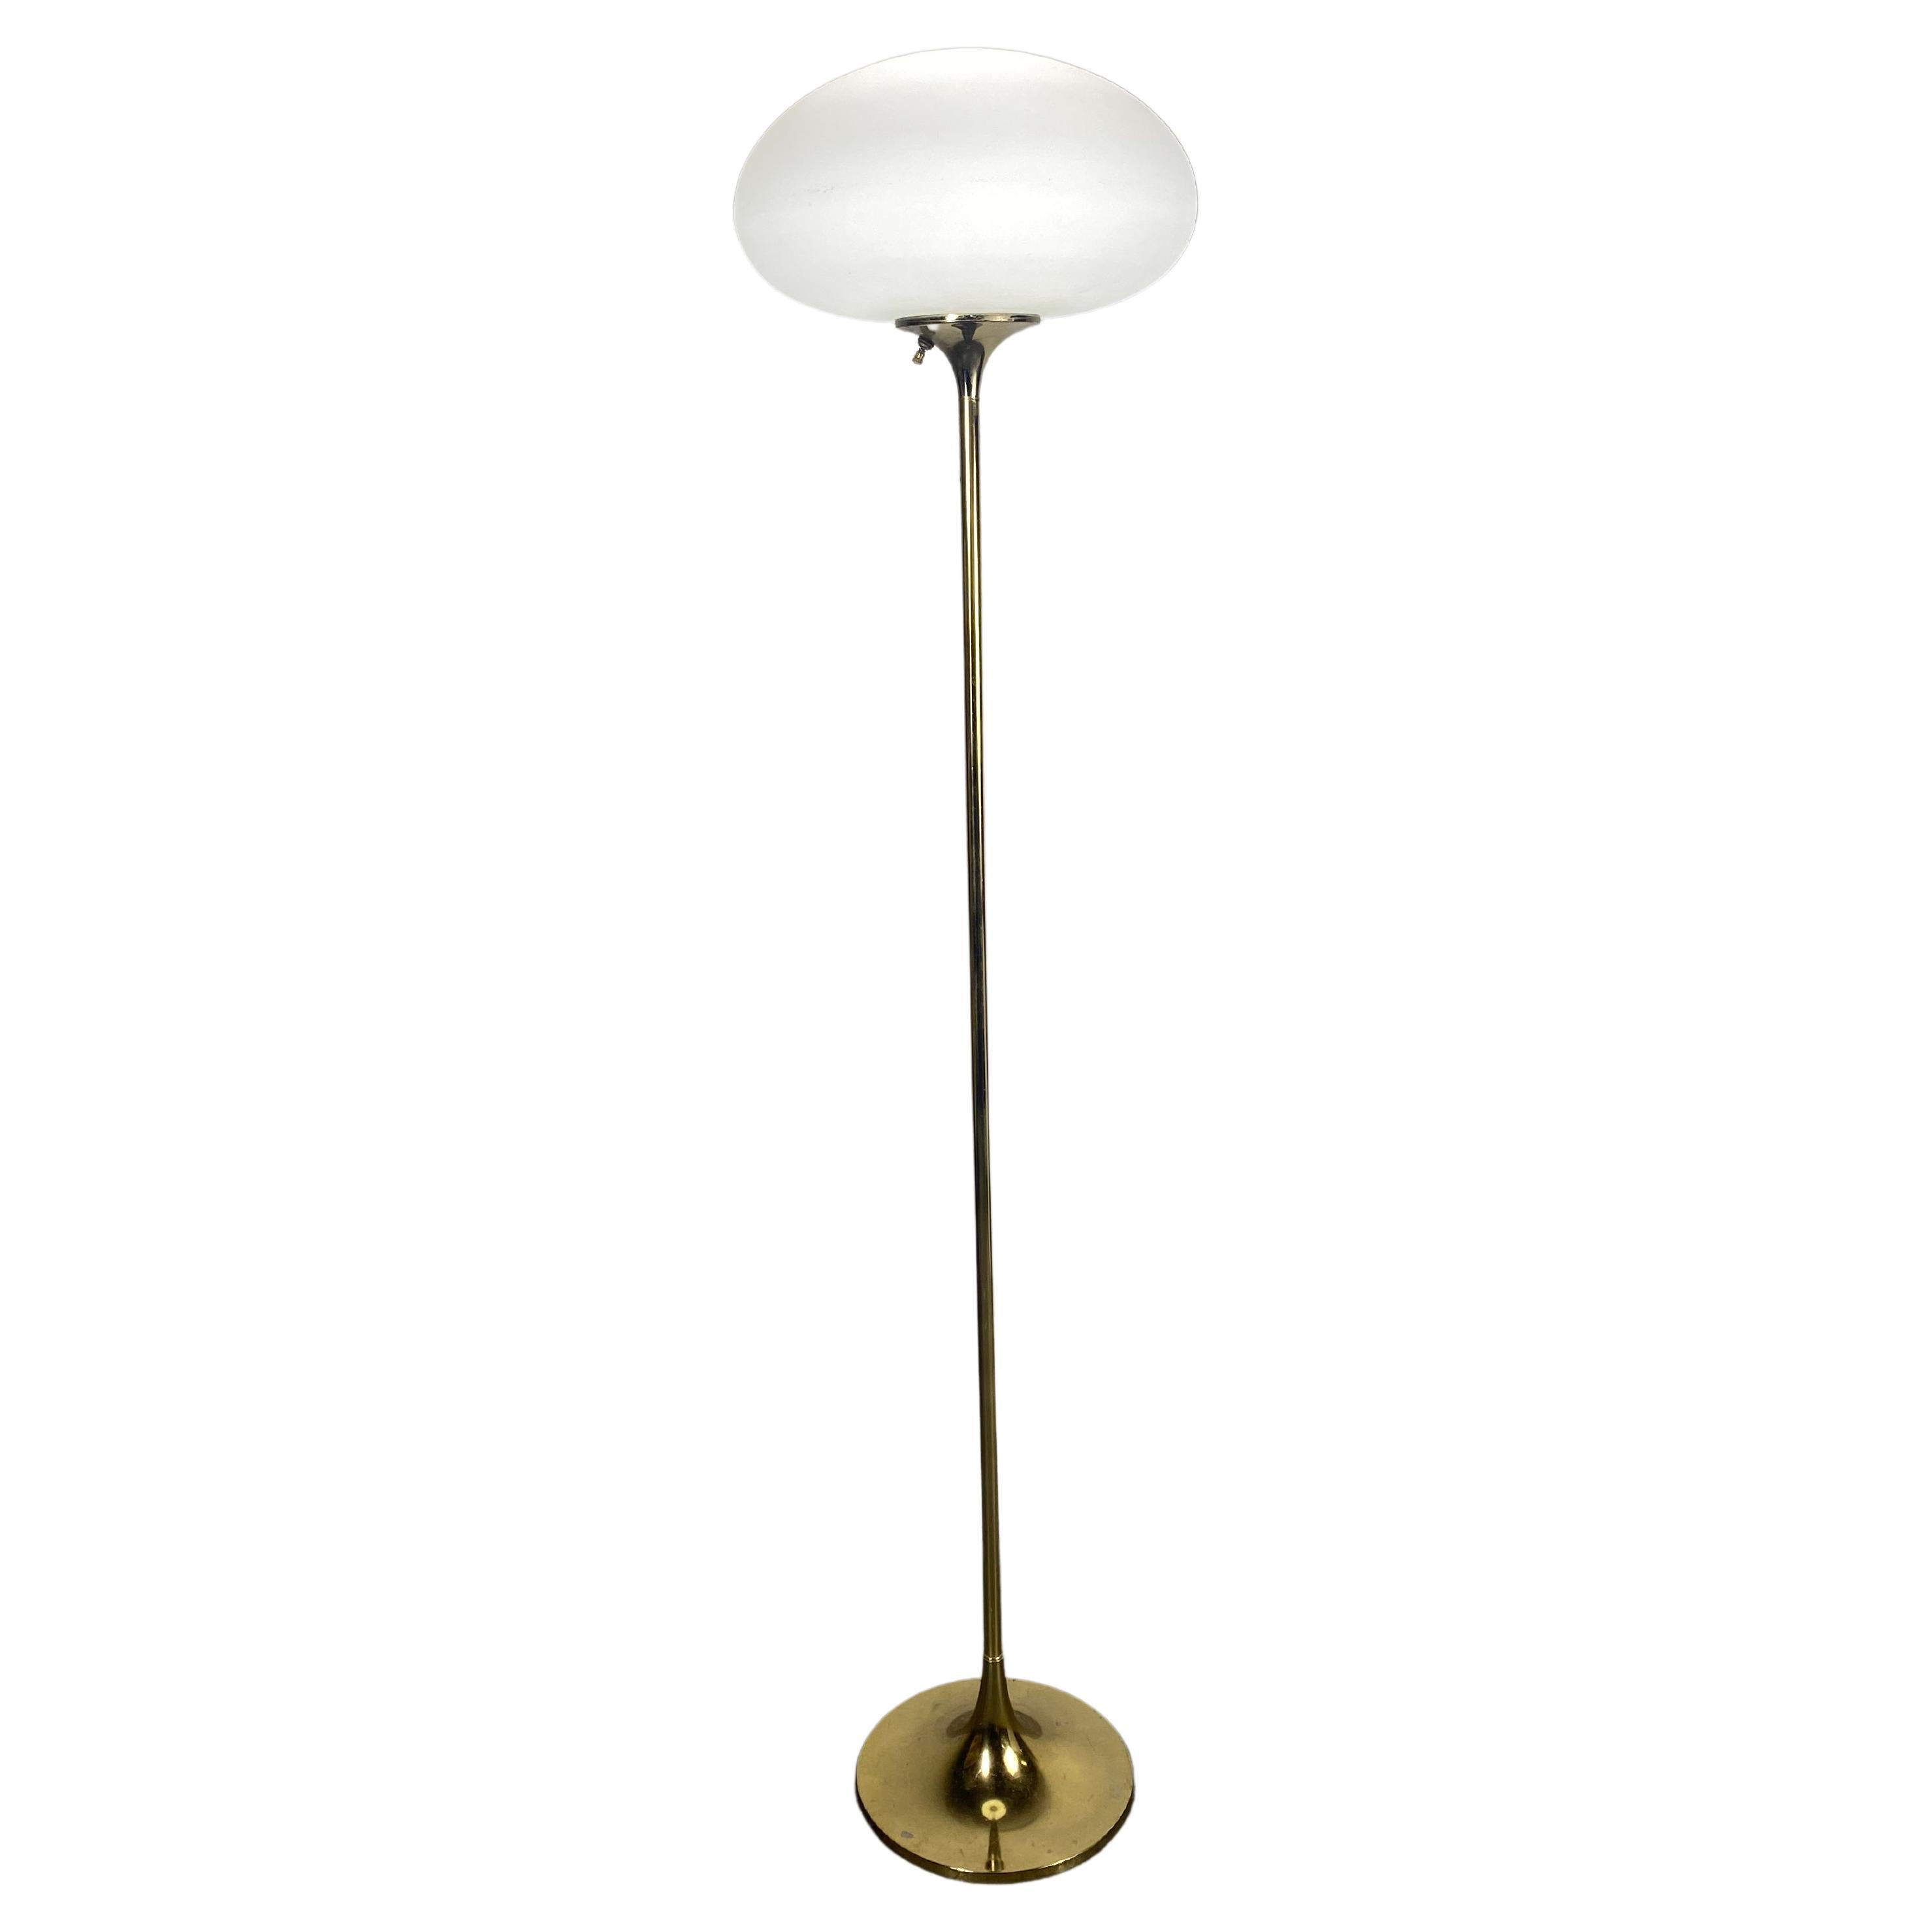 Iconic 1960s Floor Lamp by Laurel, Gold Standard, Blown Glass Mushroom Shade